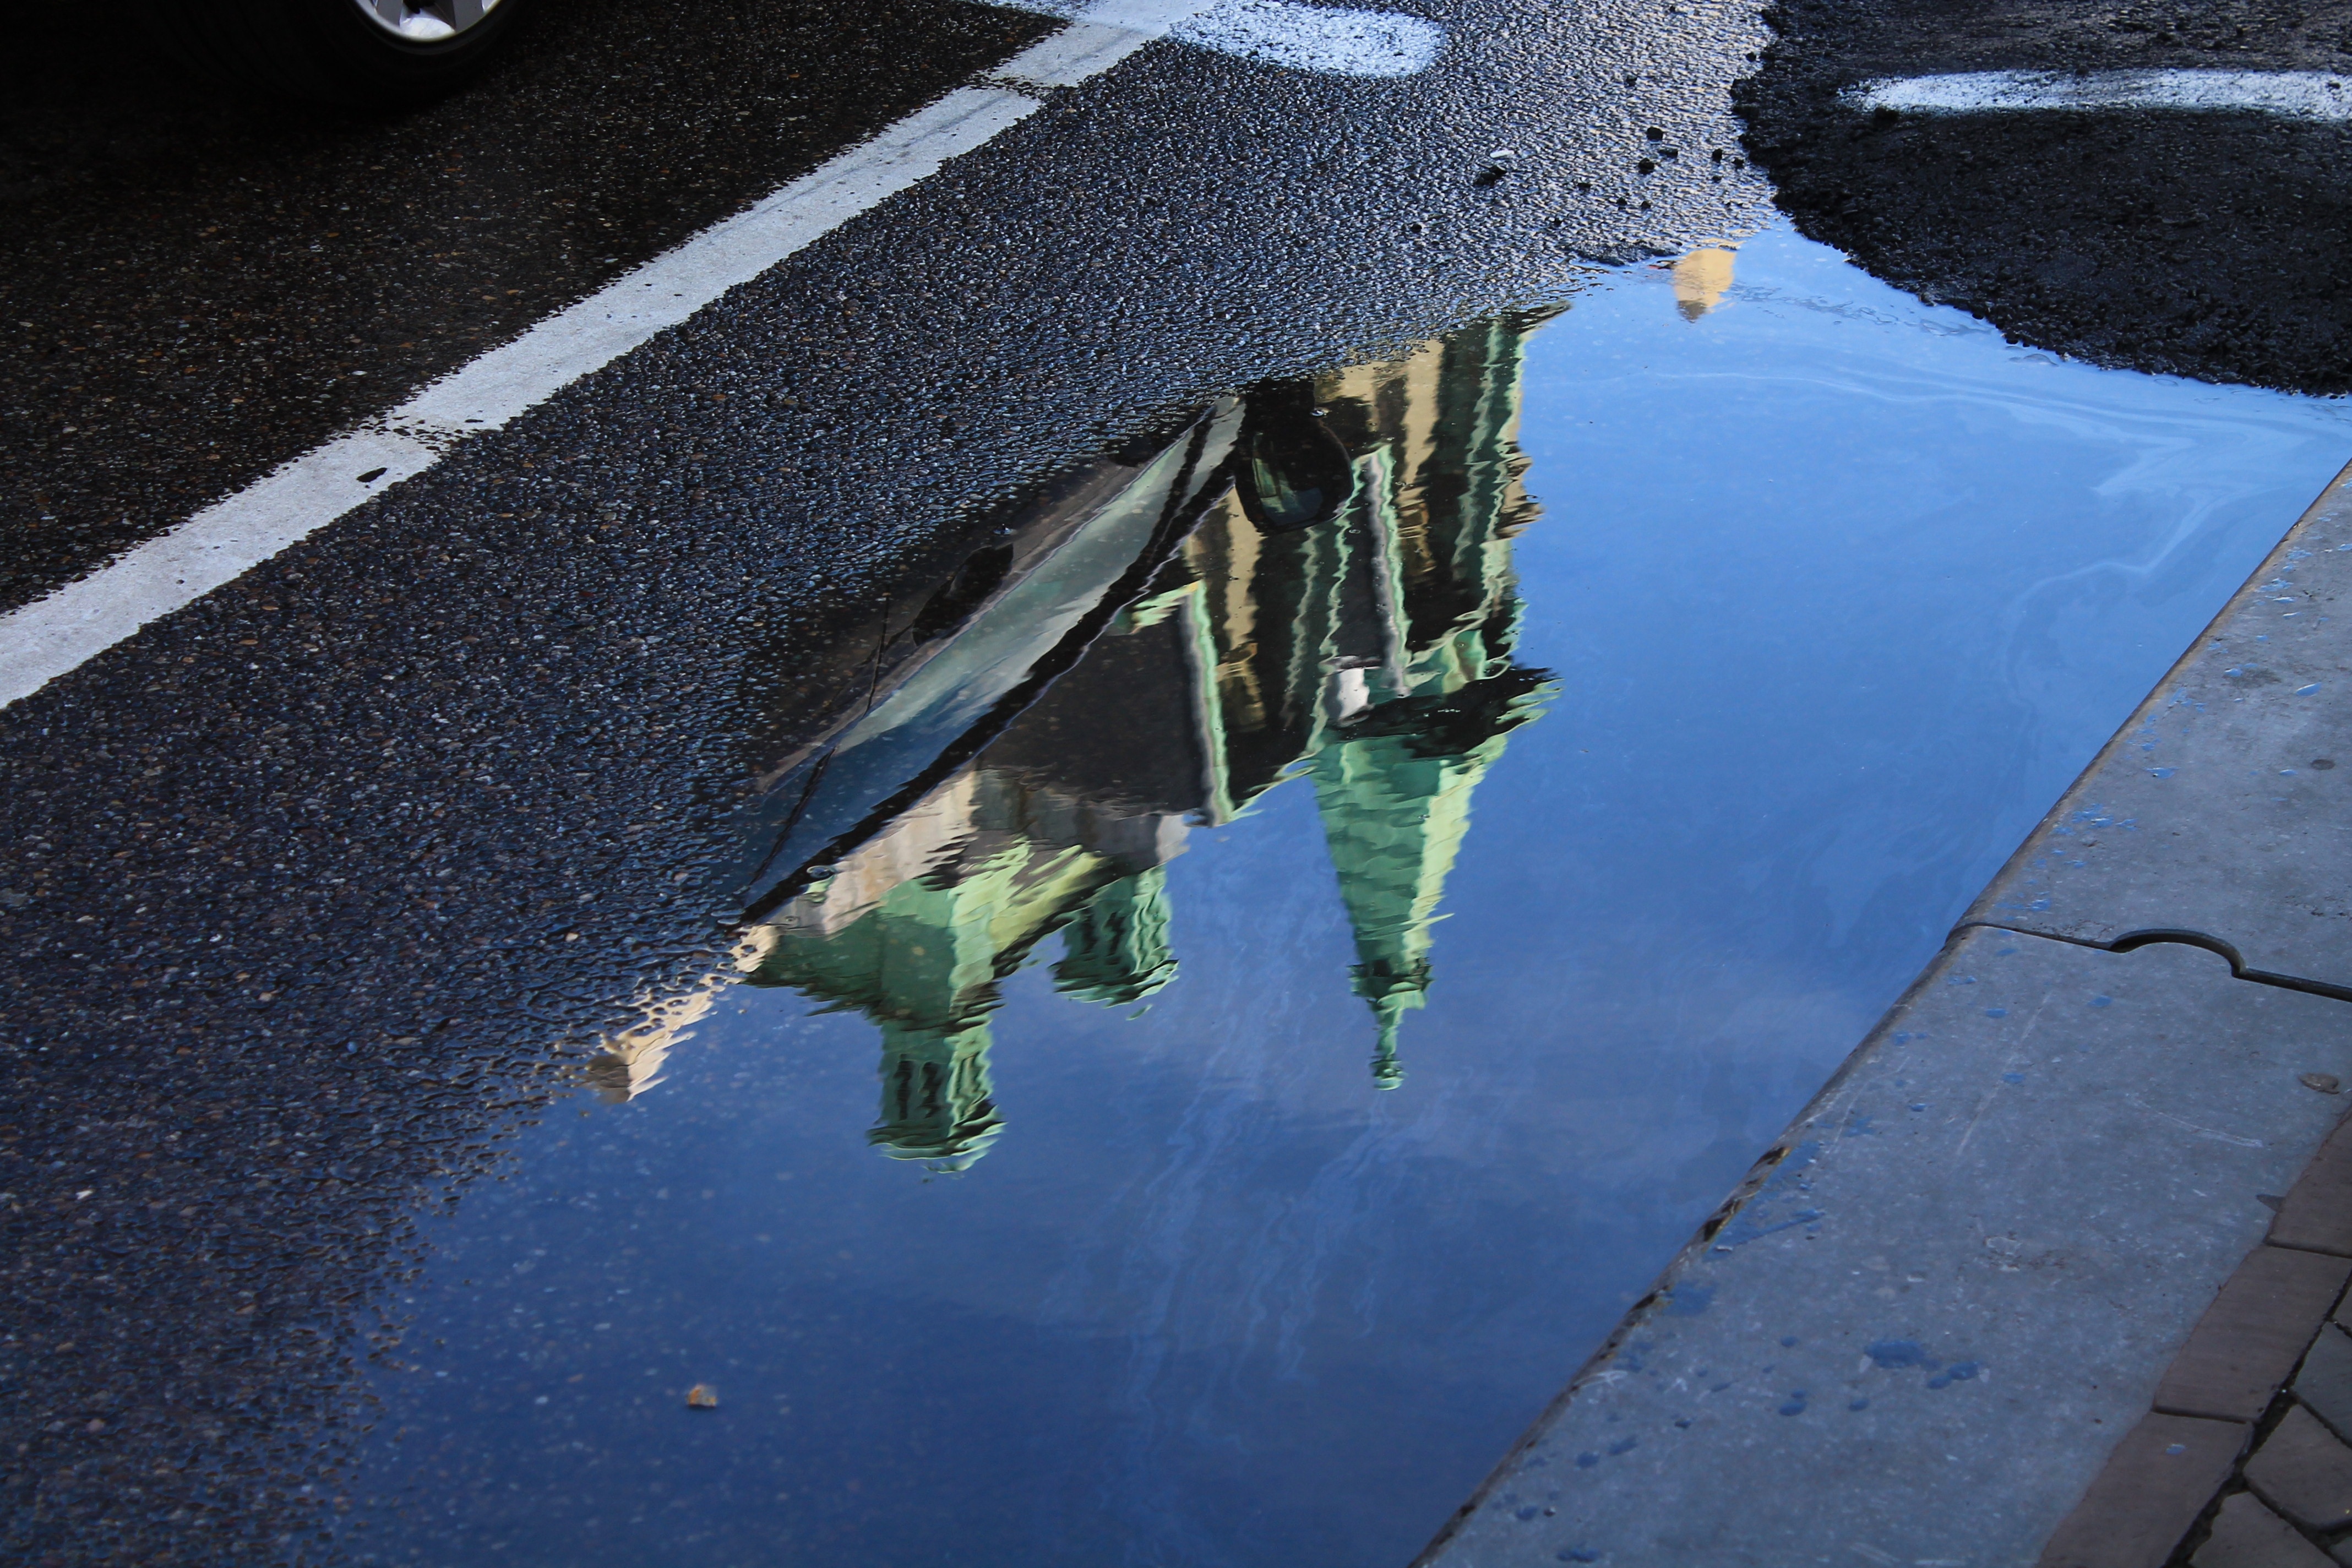 reflection of teal concrete castle